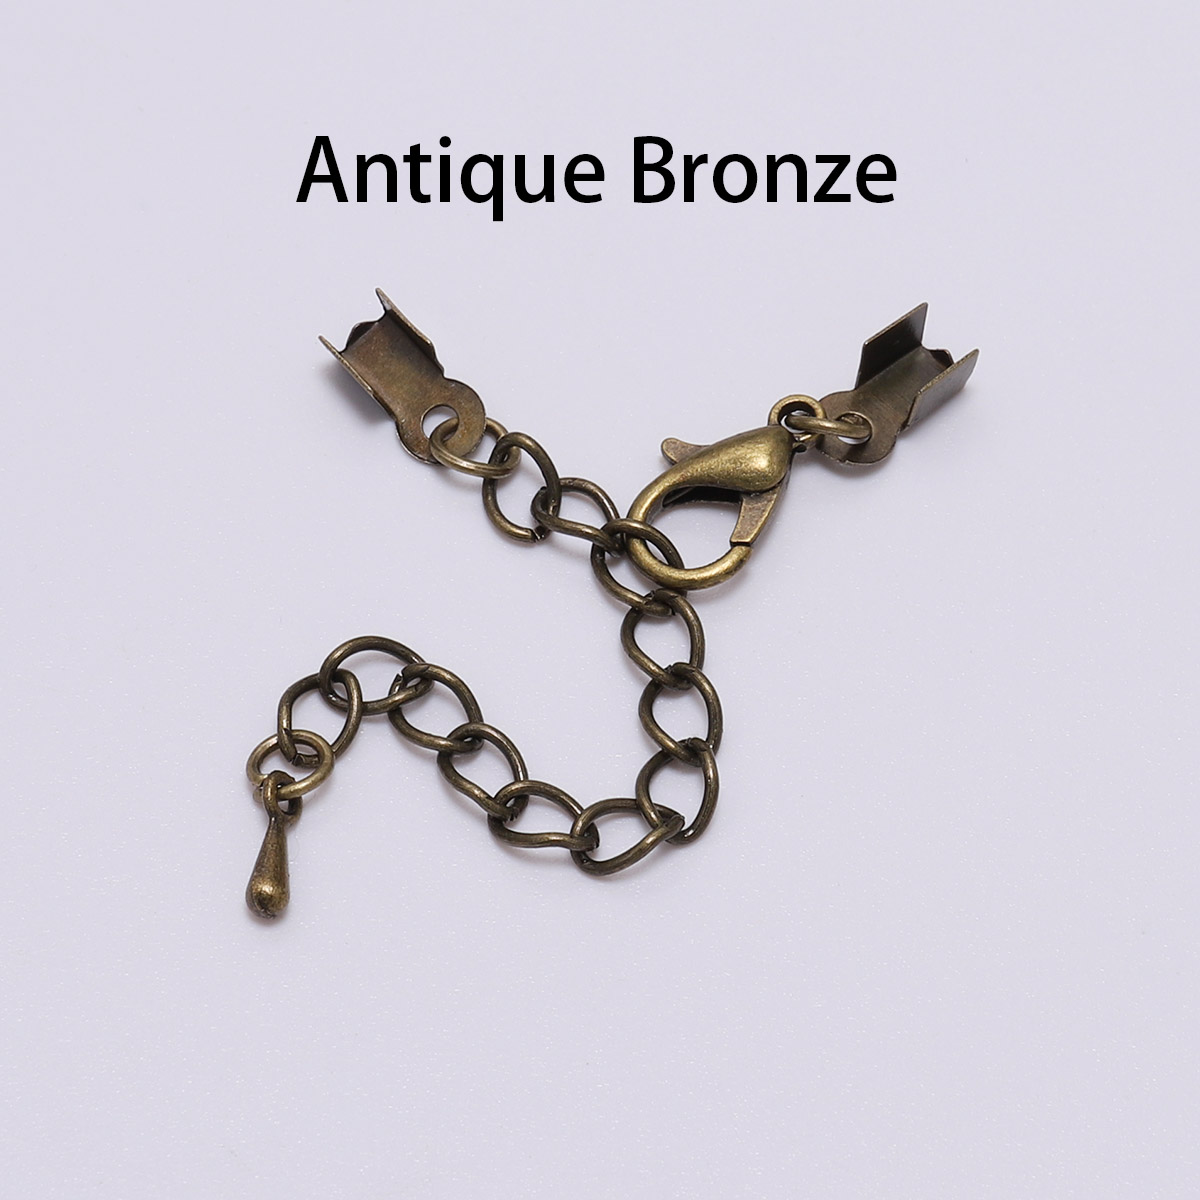 3:cor de bronze antiga